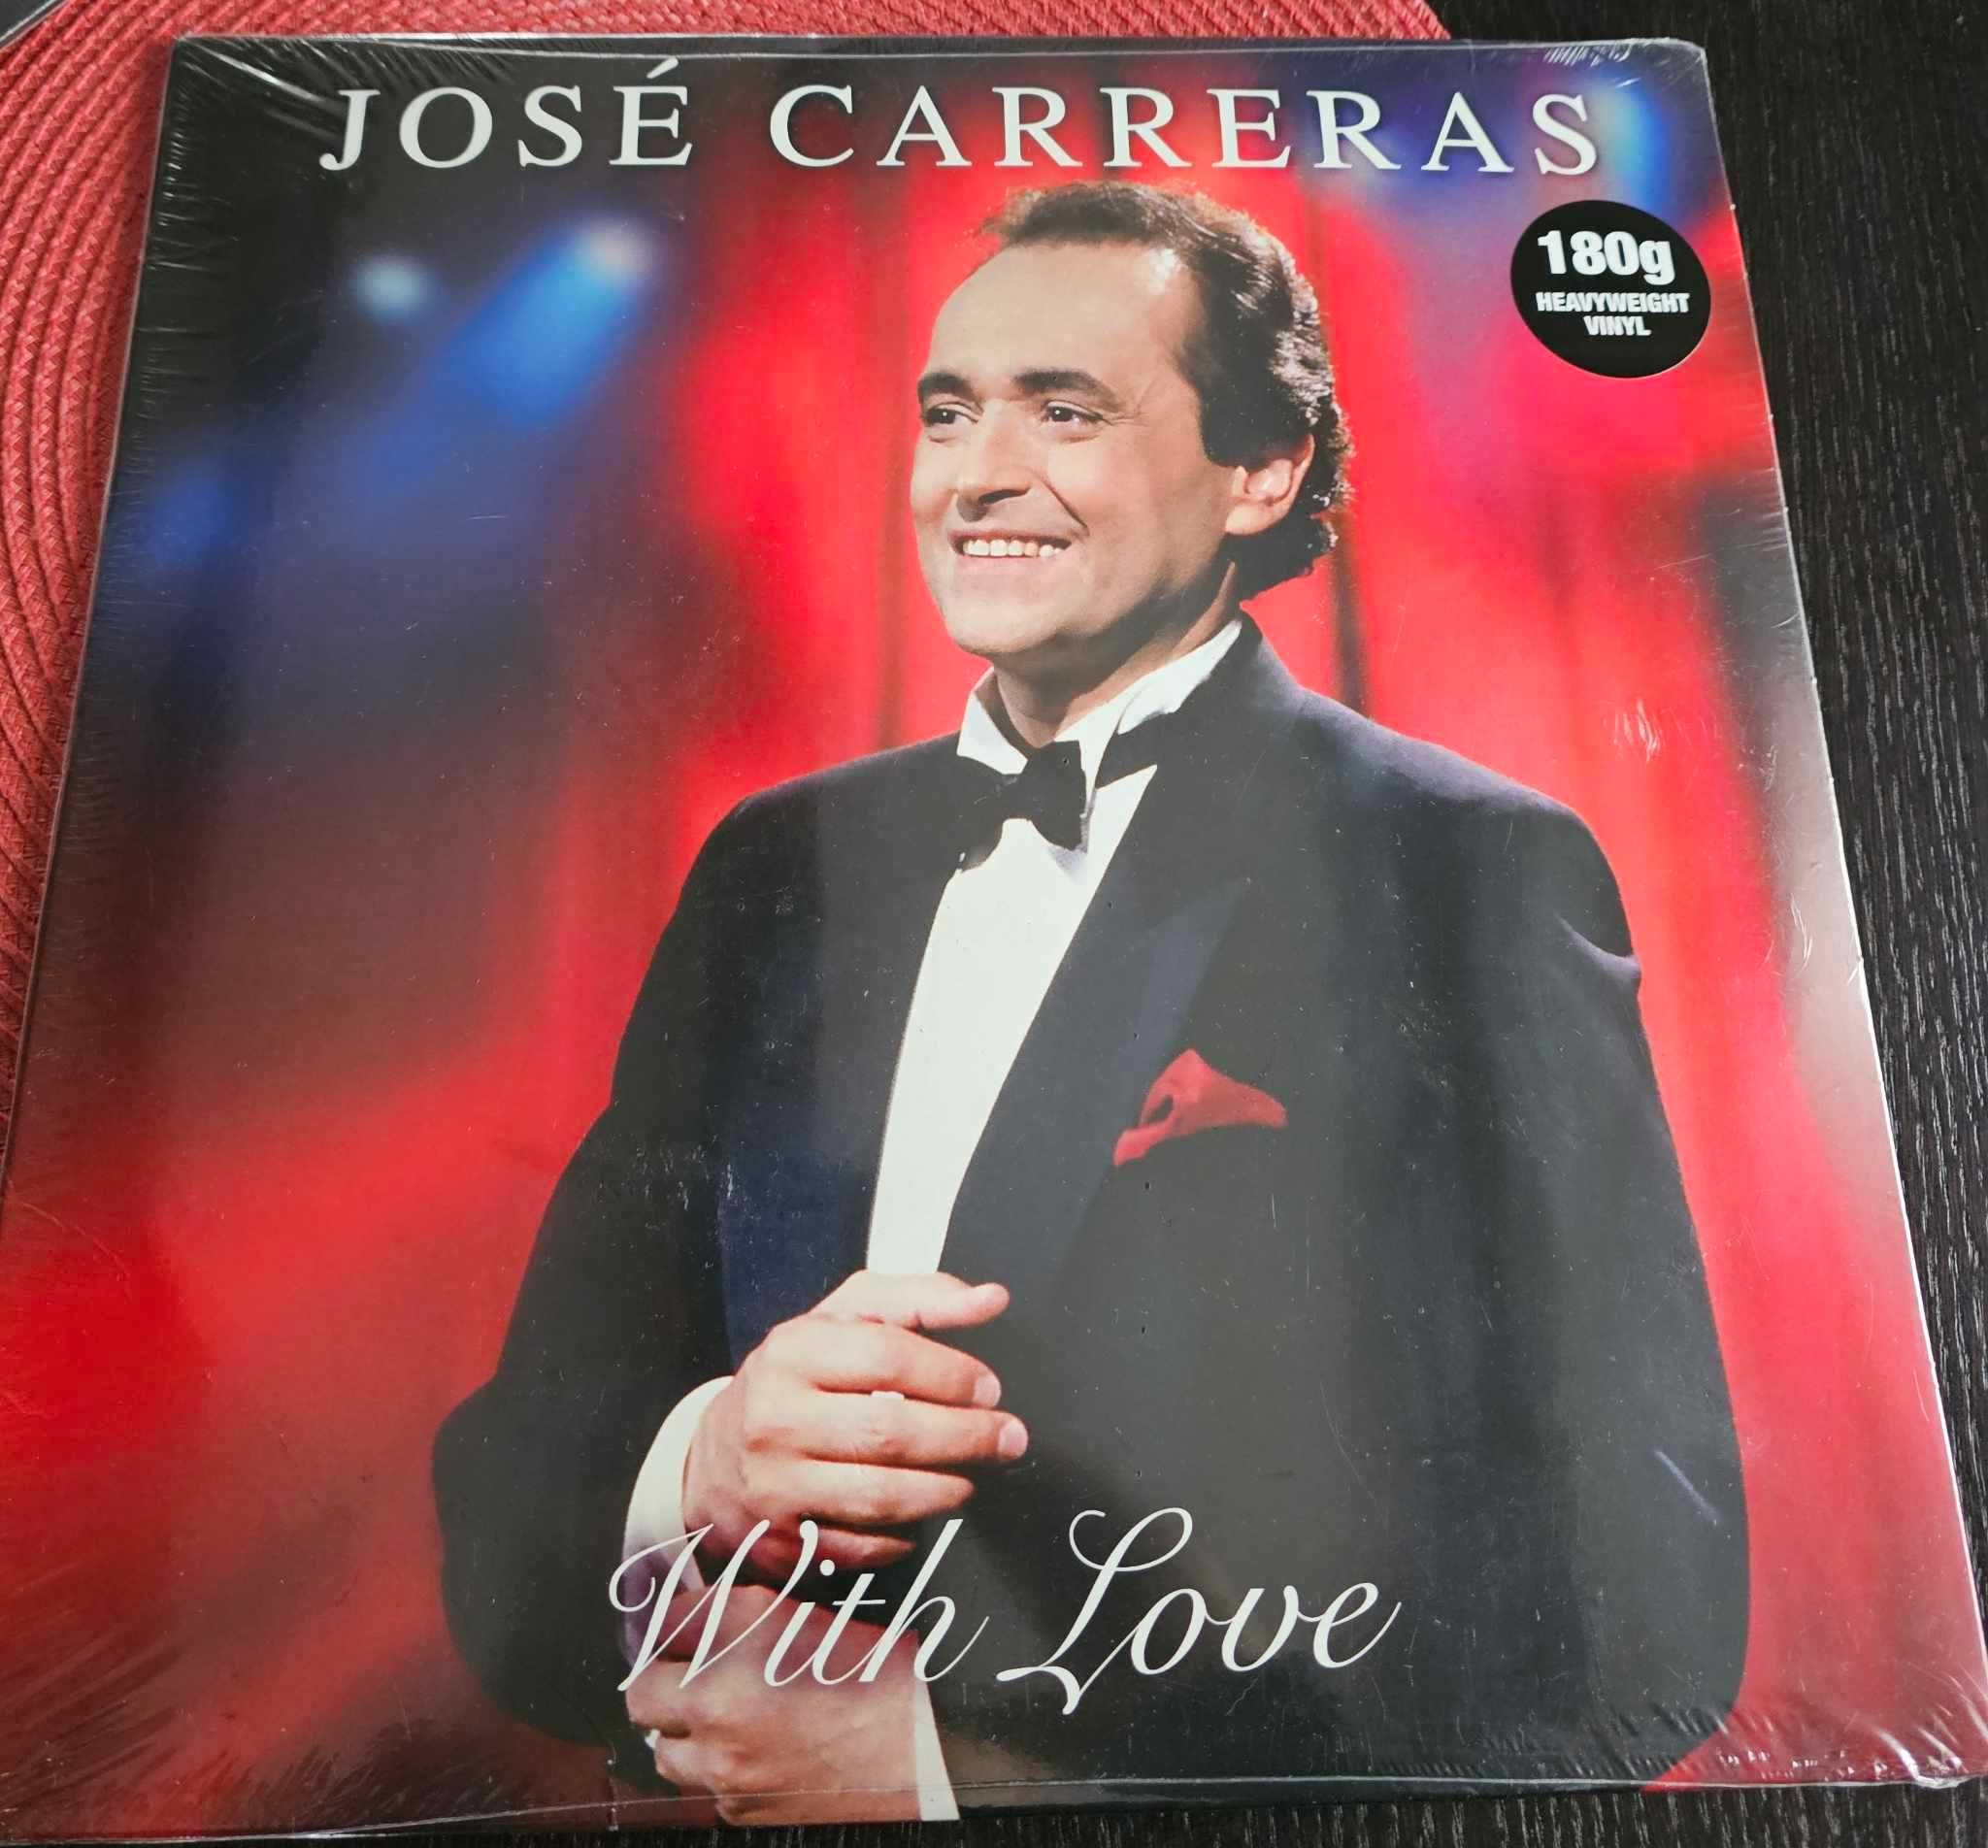 Jose carreras with love winyl